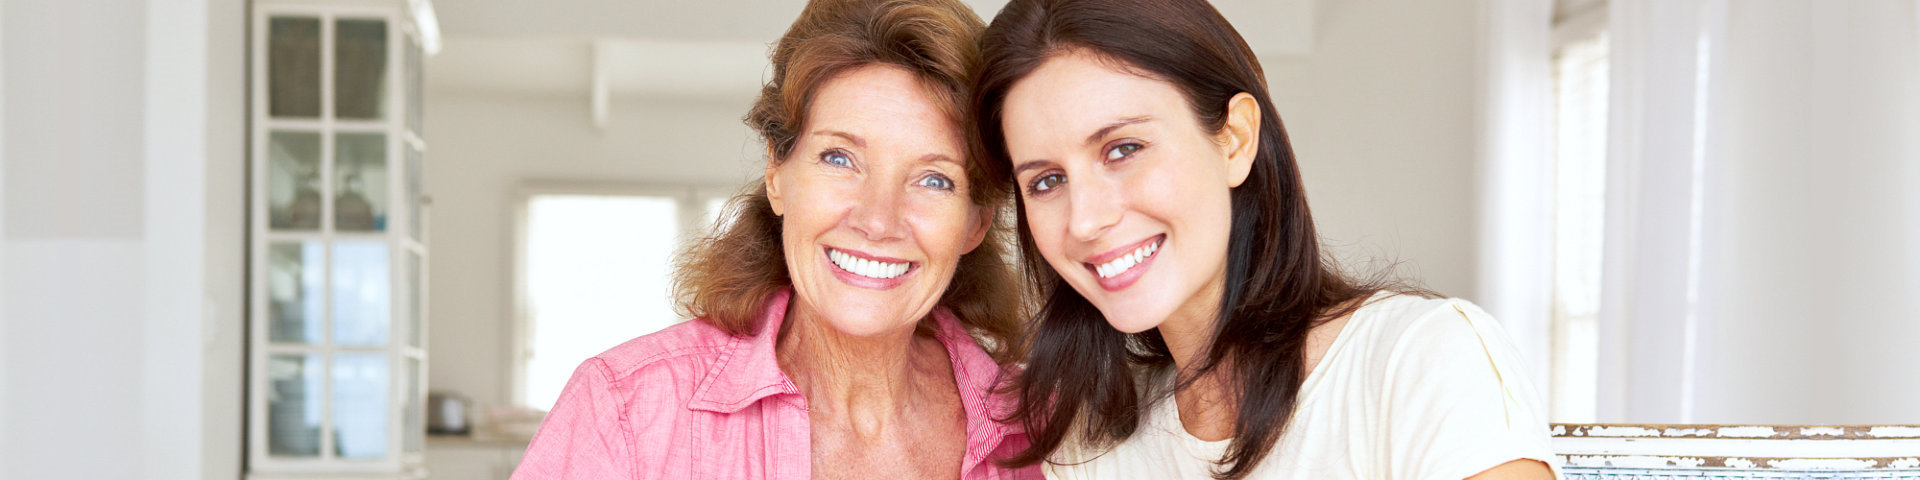 senior and a caregiver smiling together